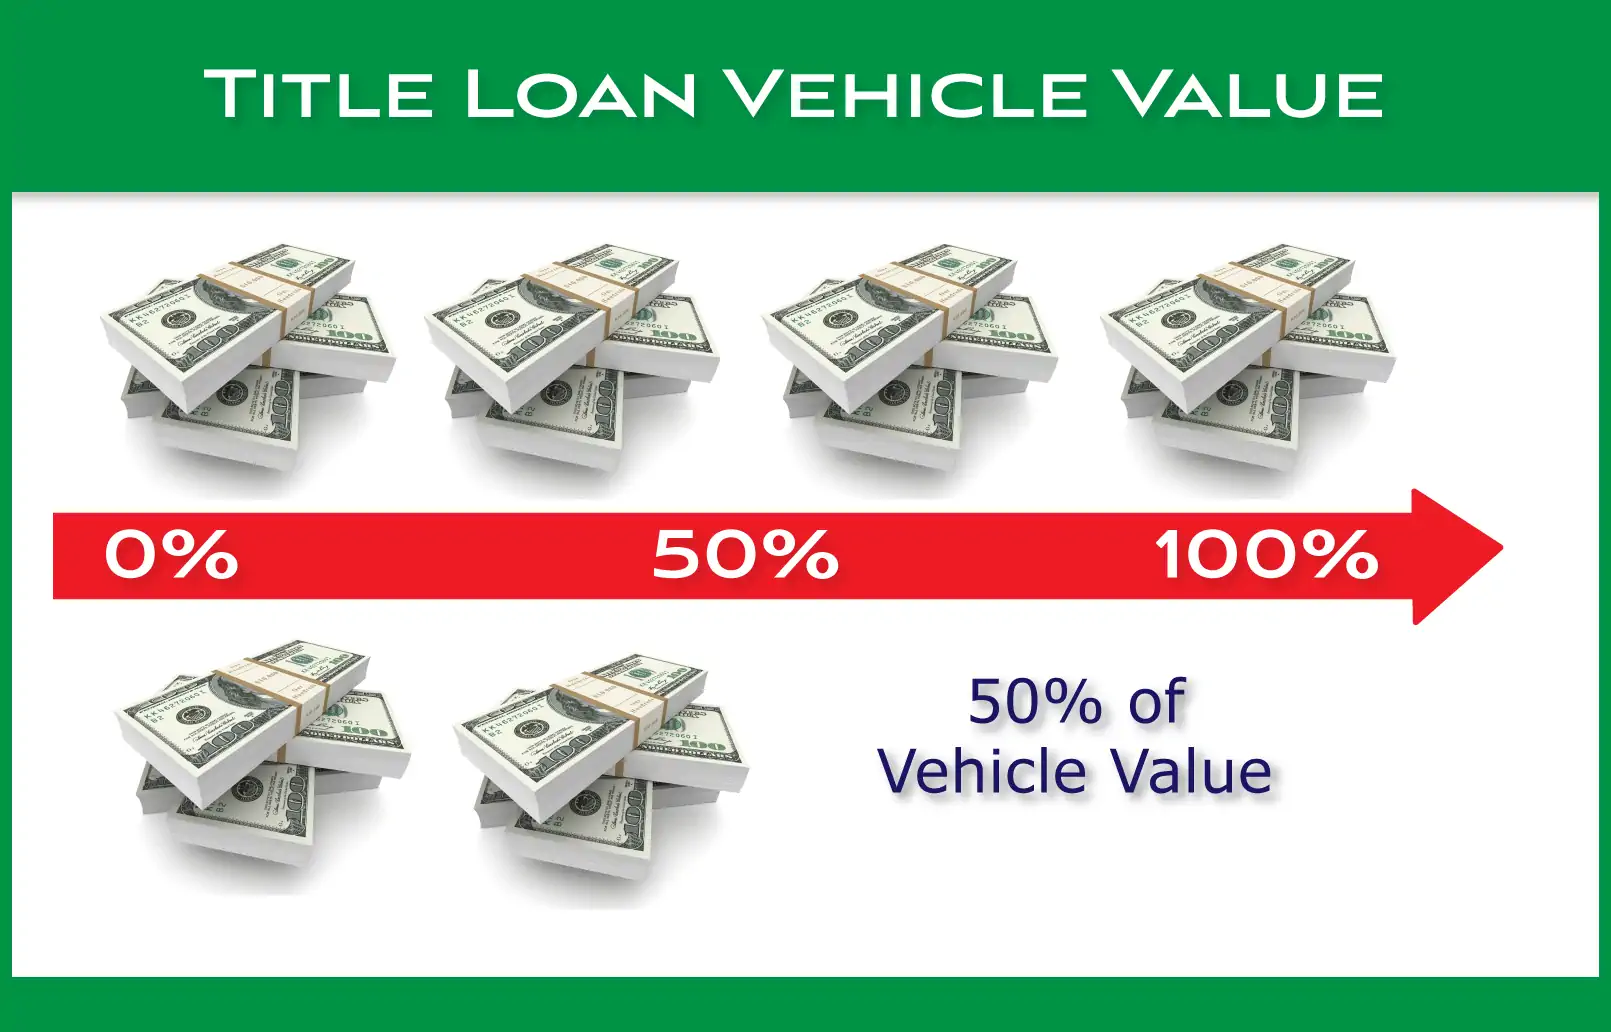 Online Title Loan Vehicle Value